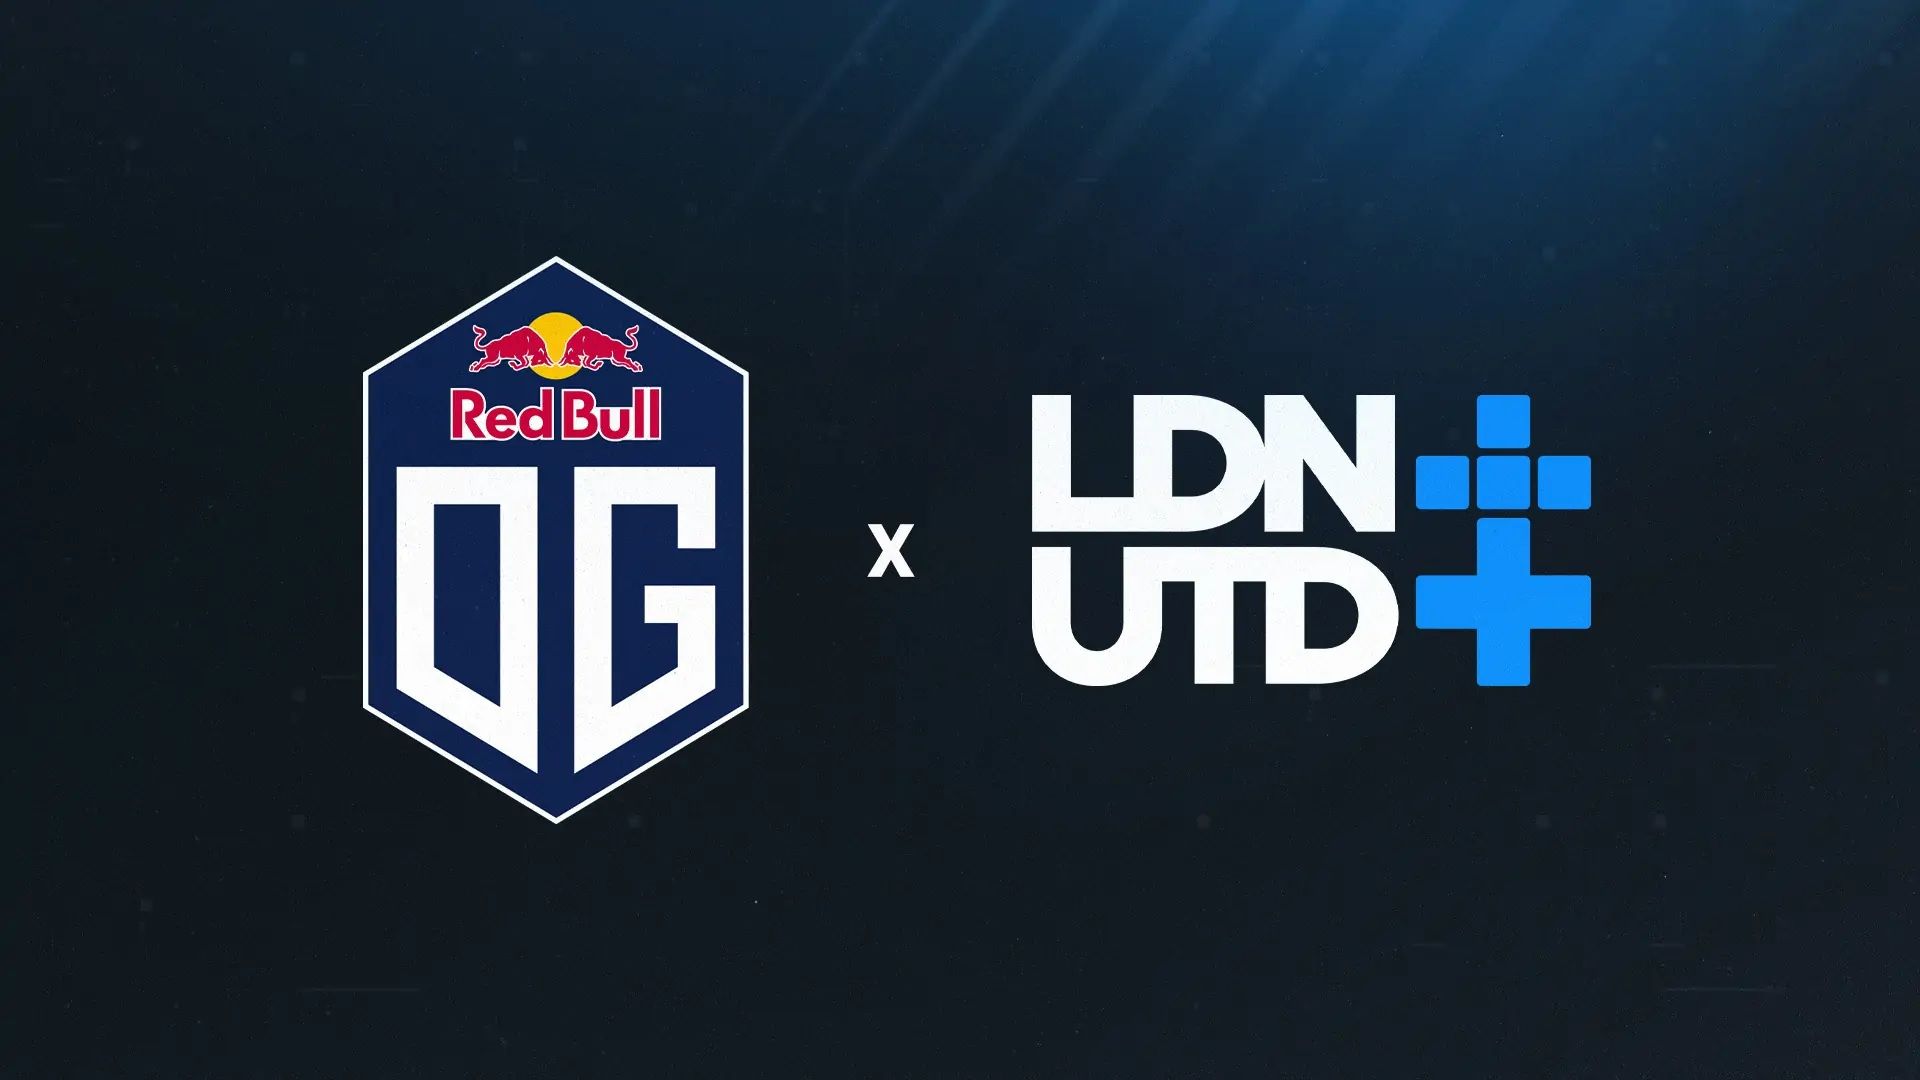 OG Esports bekerja sama dengan LDN UTD untuk berkompetisi di Valorant.